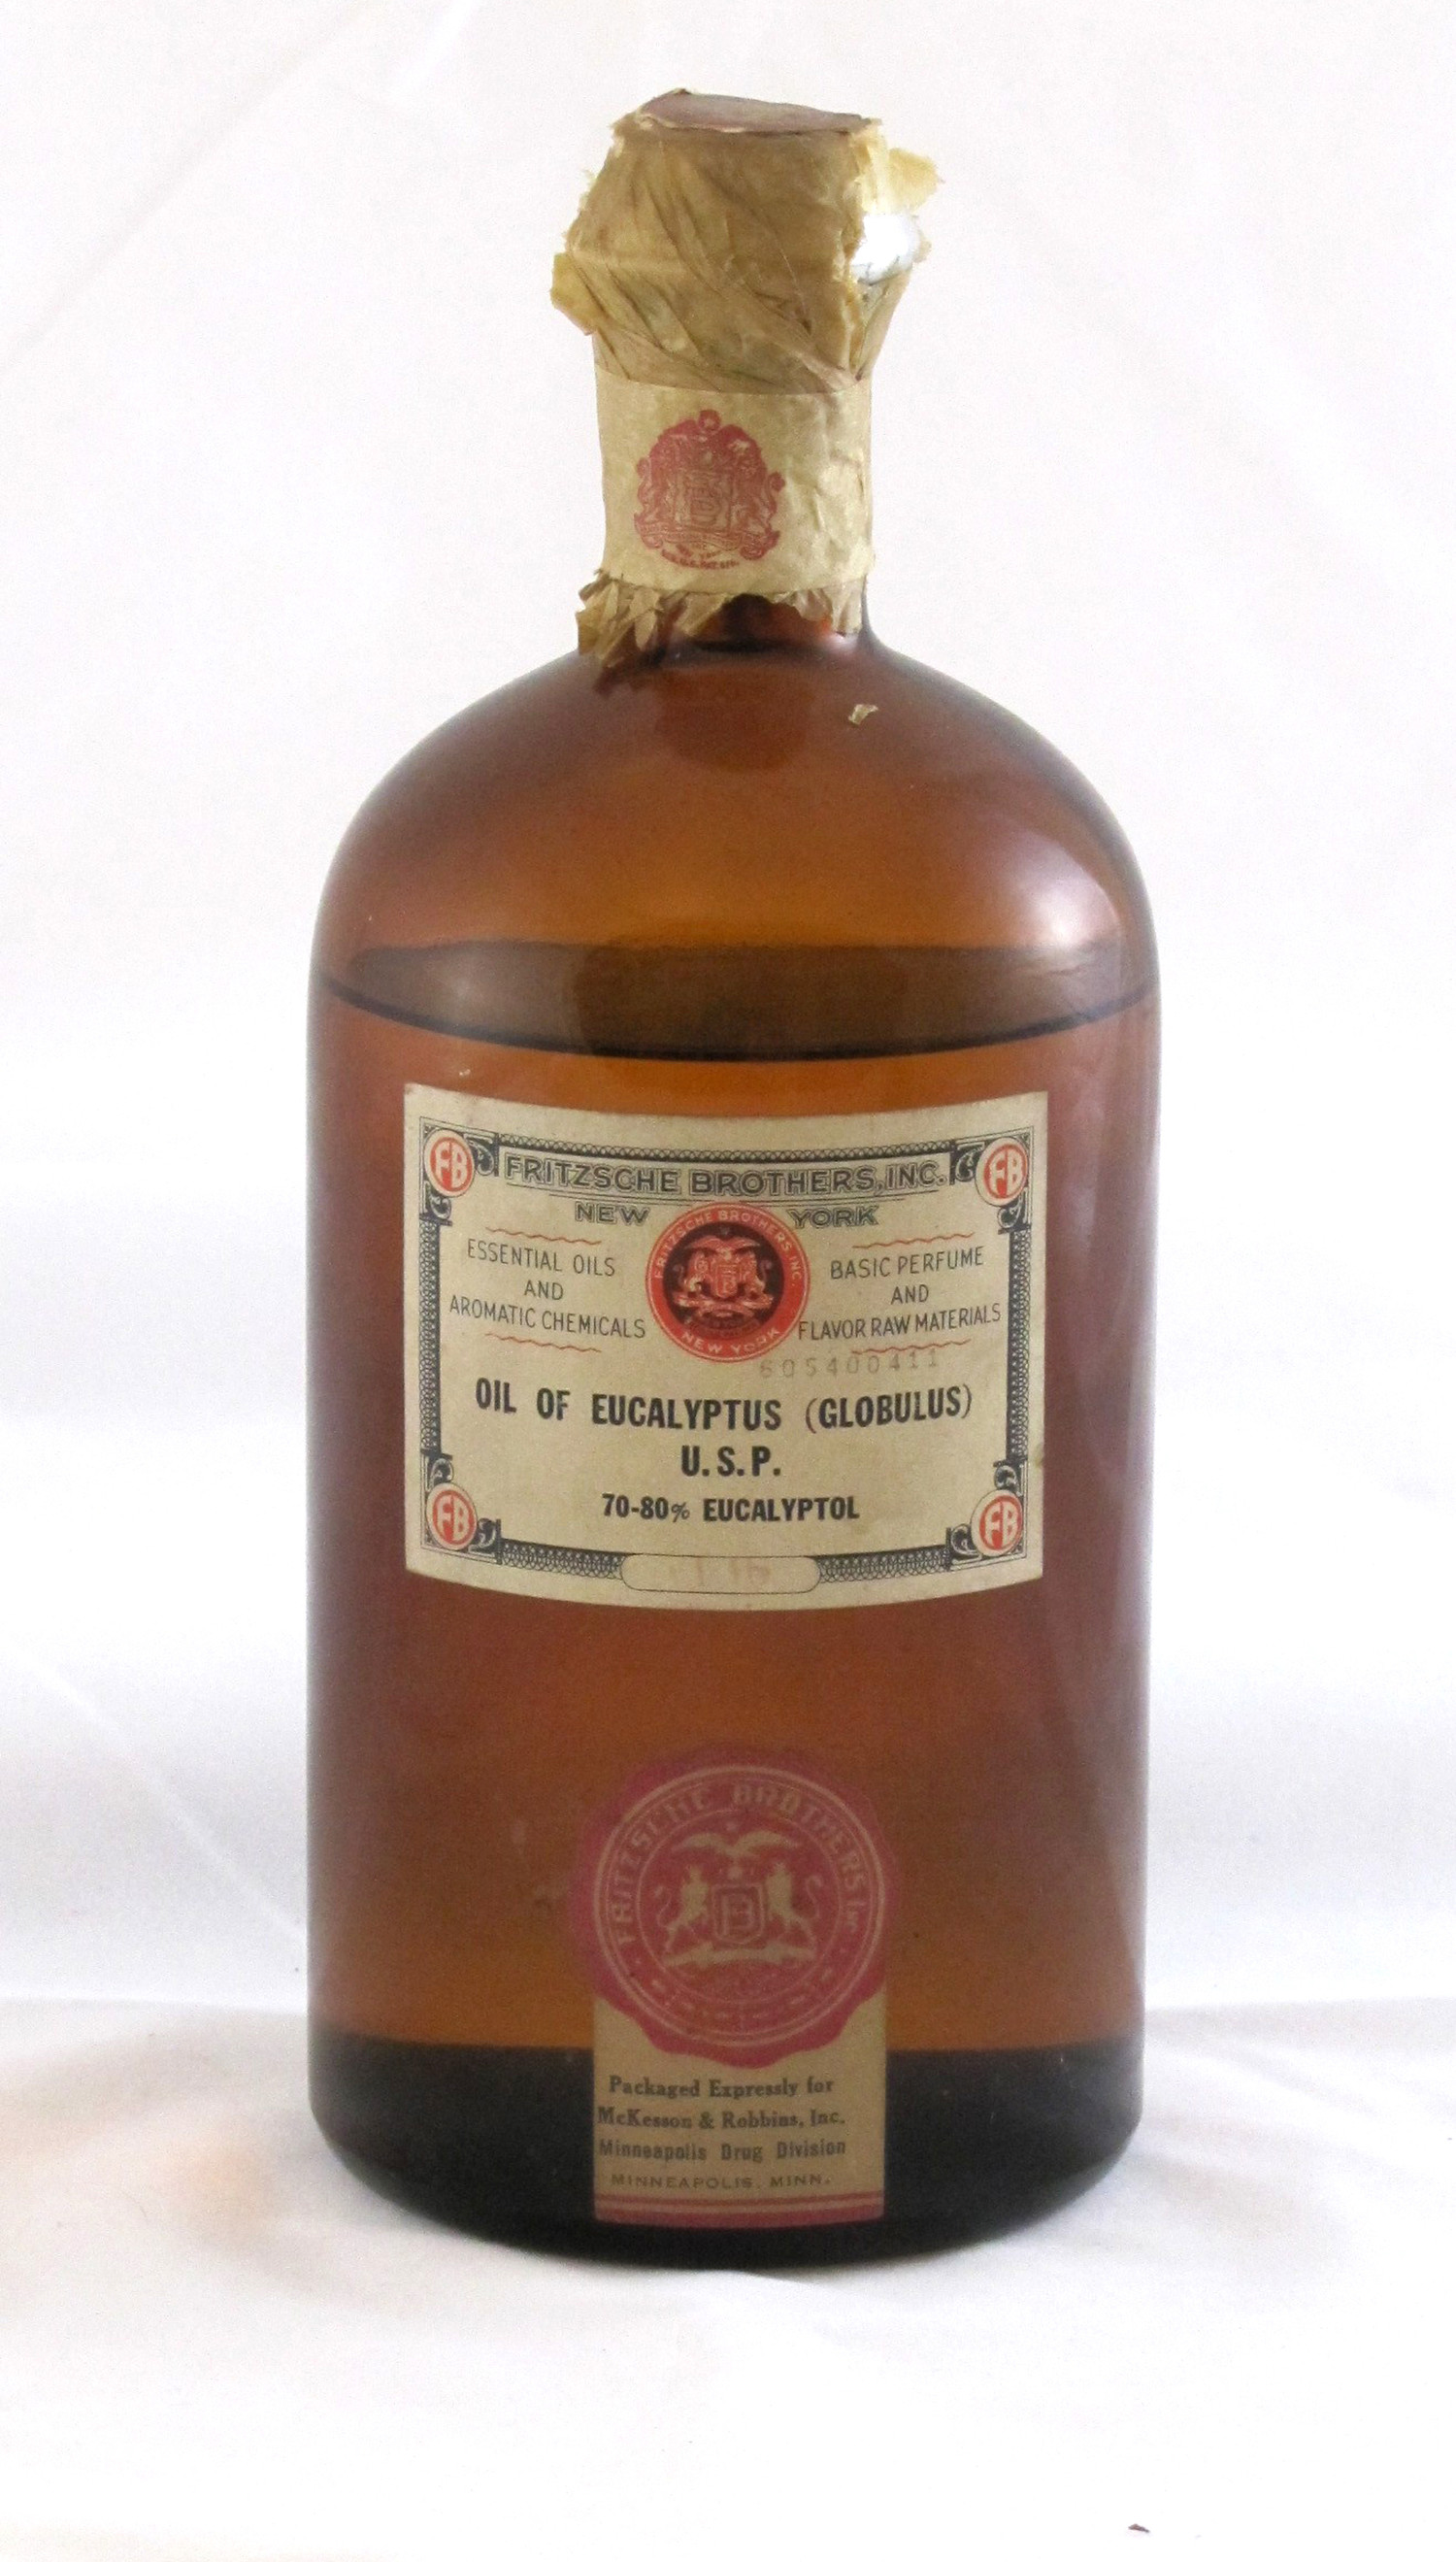 Oil of eucalyptus in brown bottle